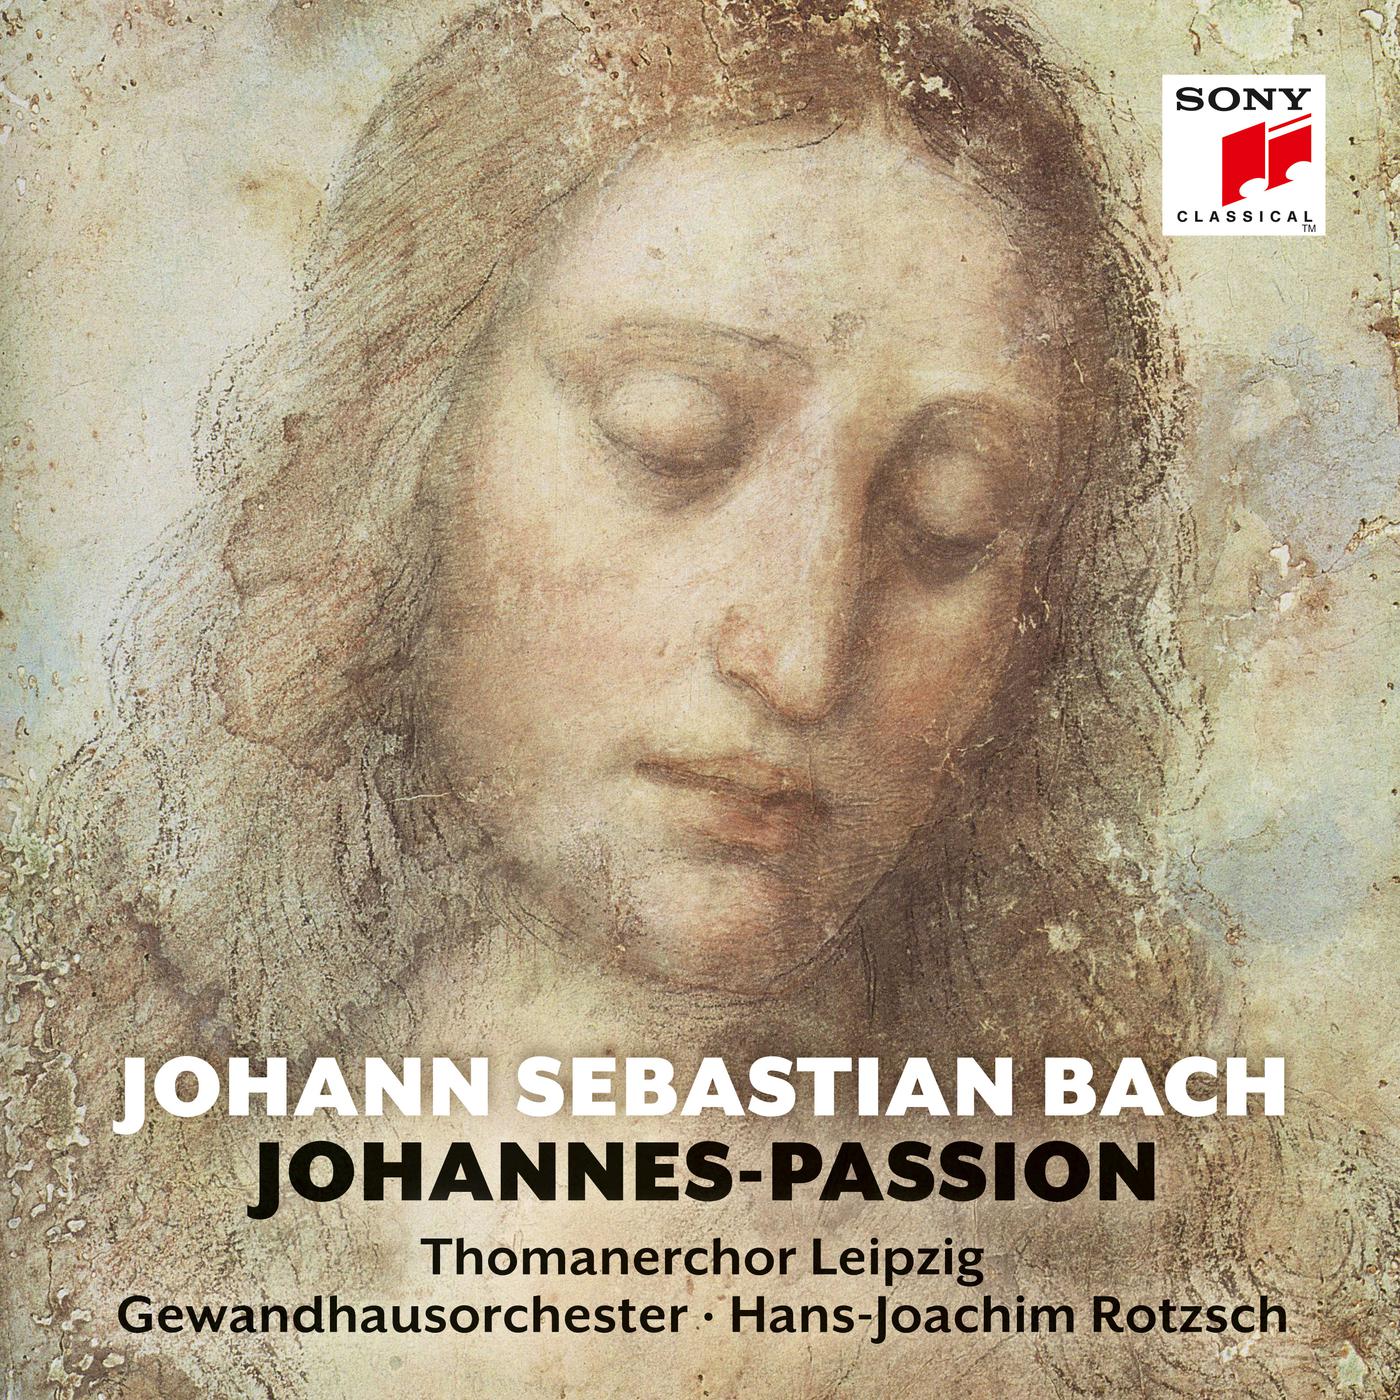 Johannes-Passion, BWV 245:Teil 2: No. 38, Darnach bat Pilatus Joseph von Arimathia